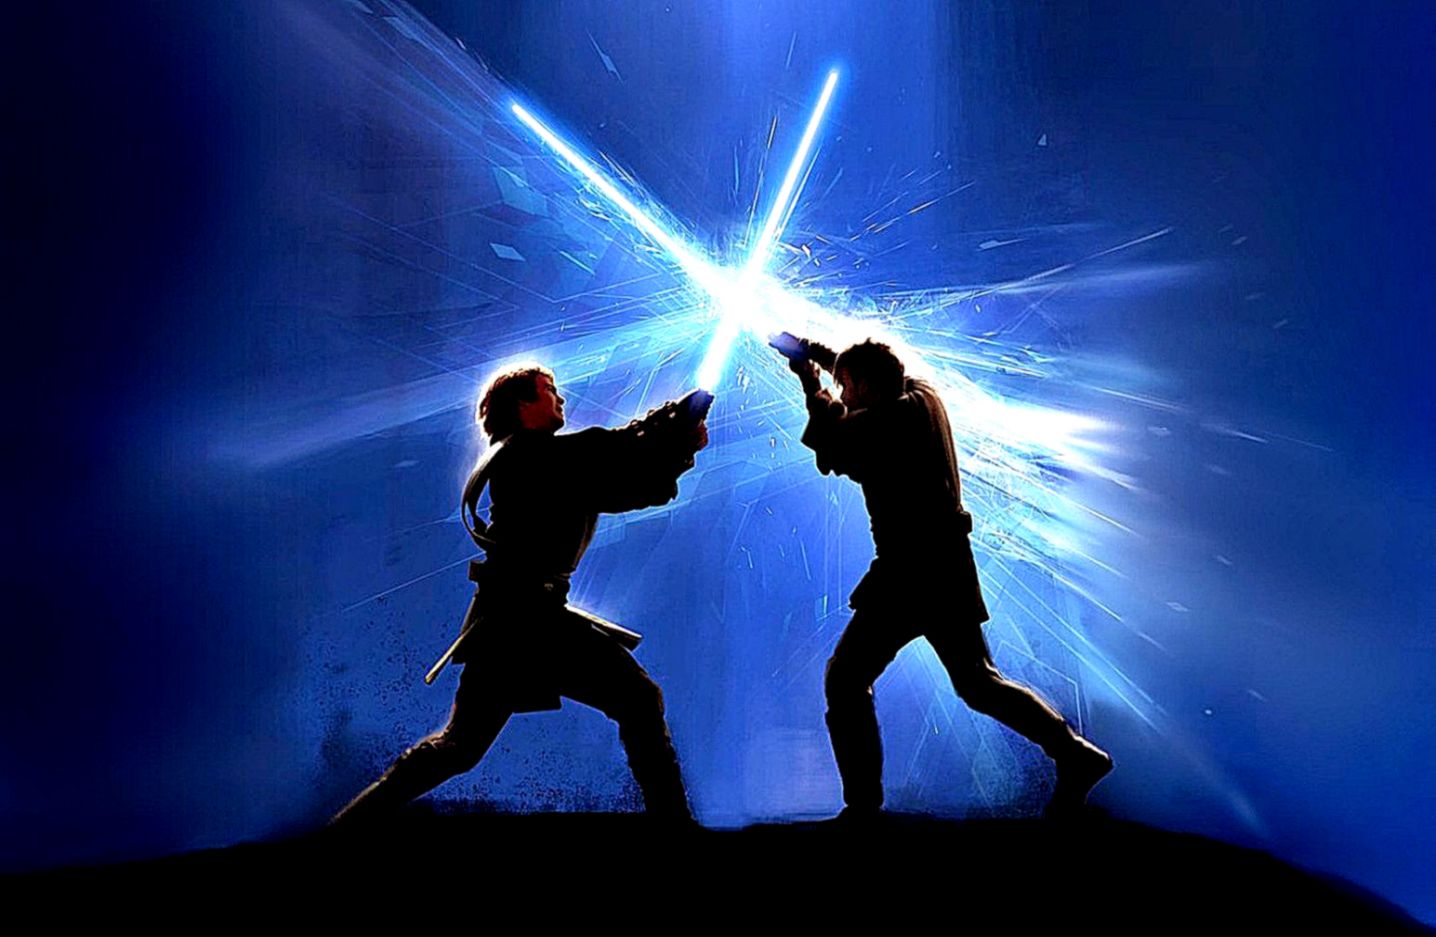 all lightsaber duels